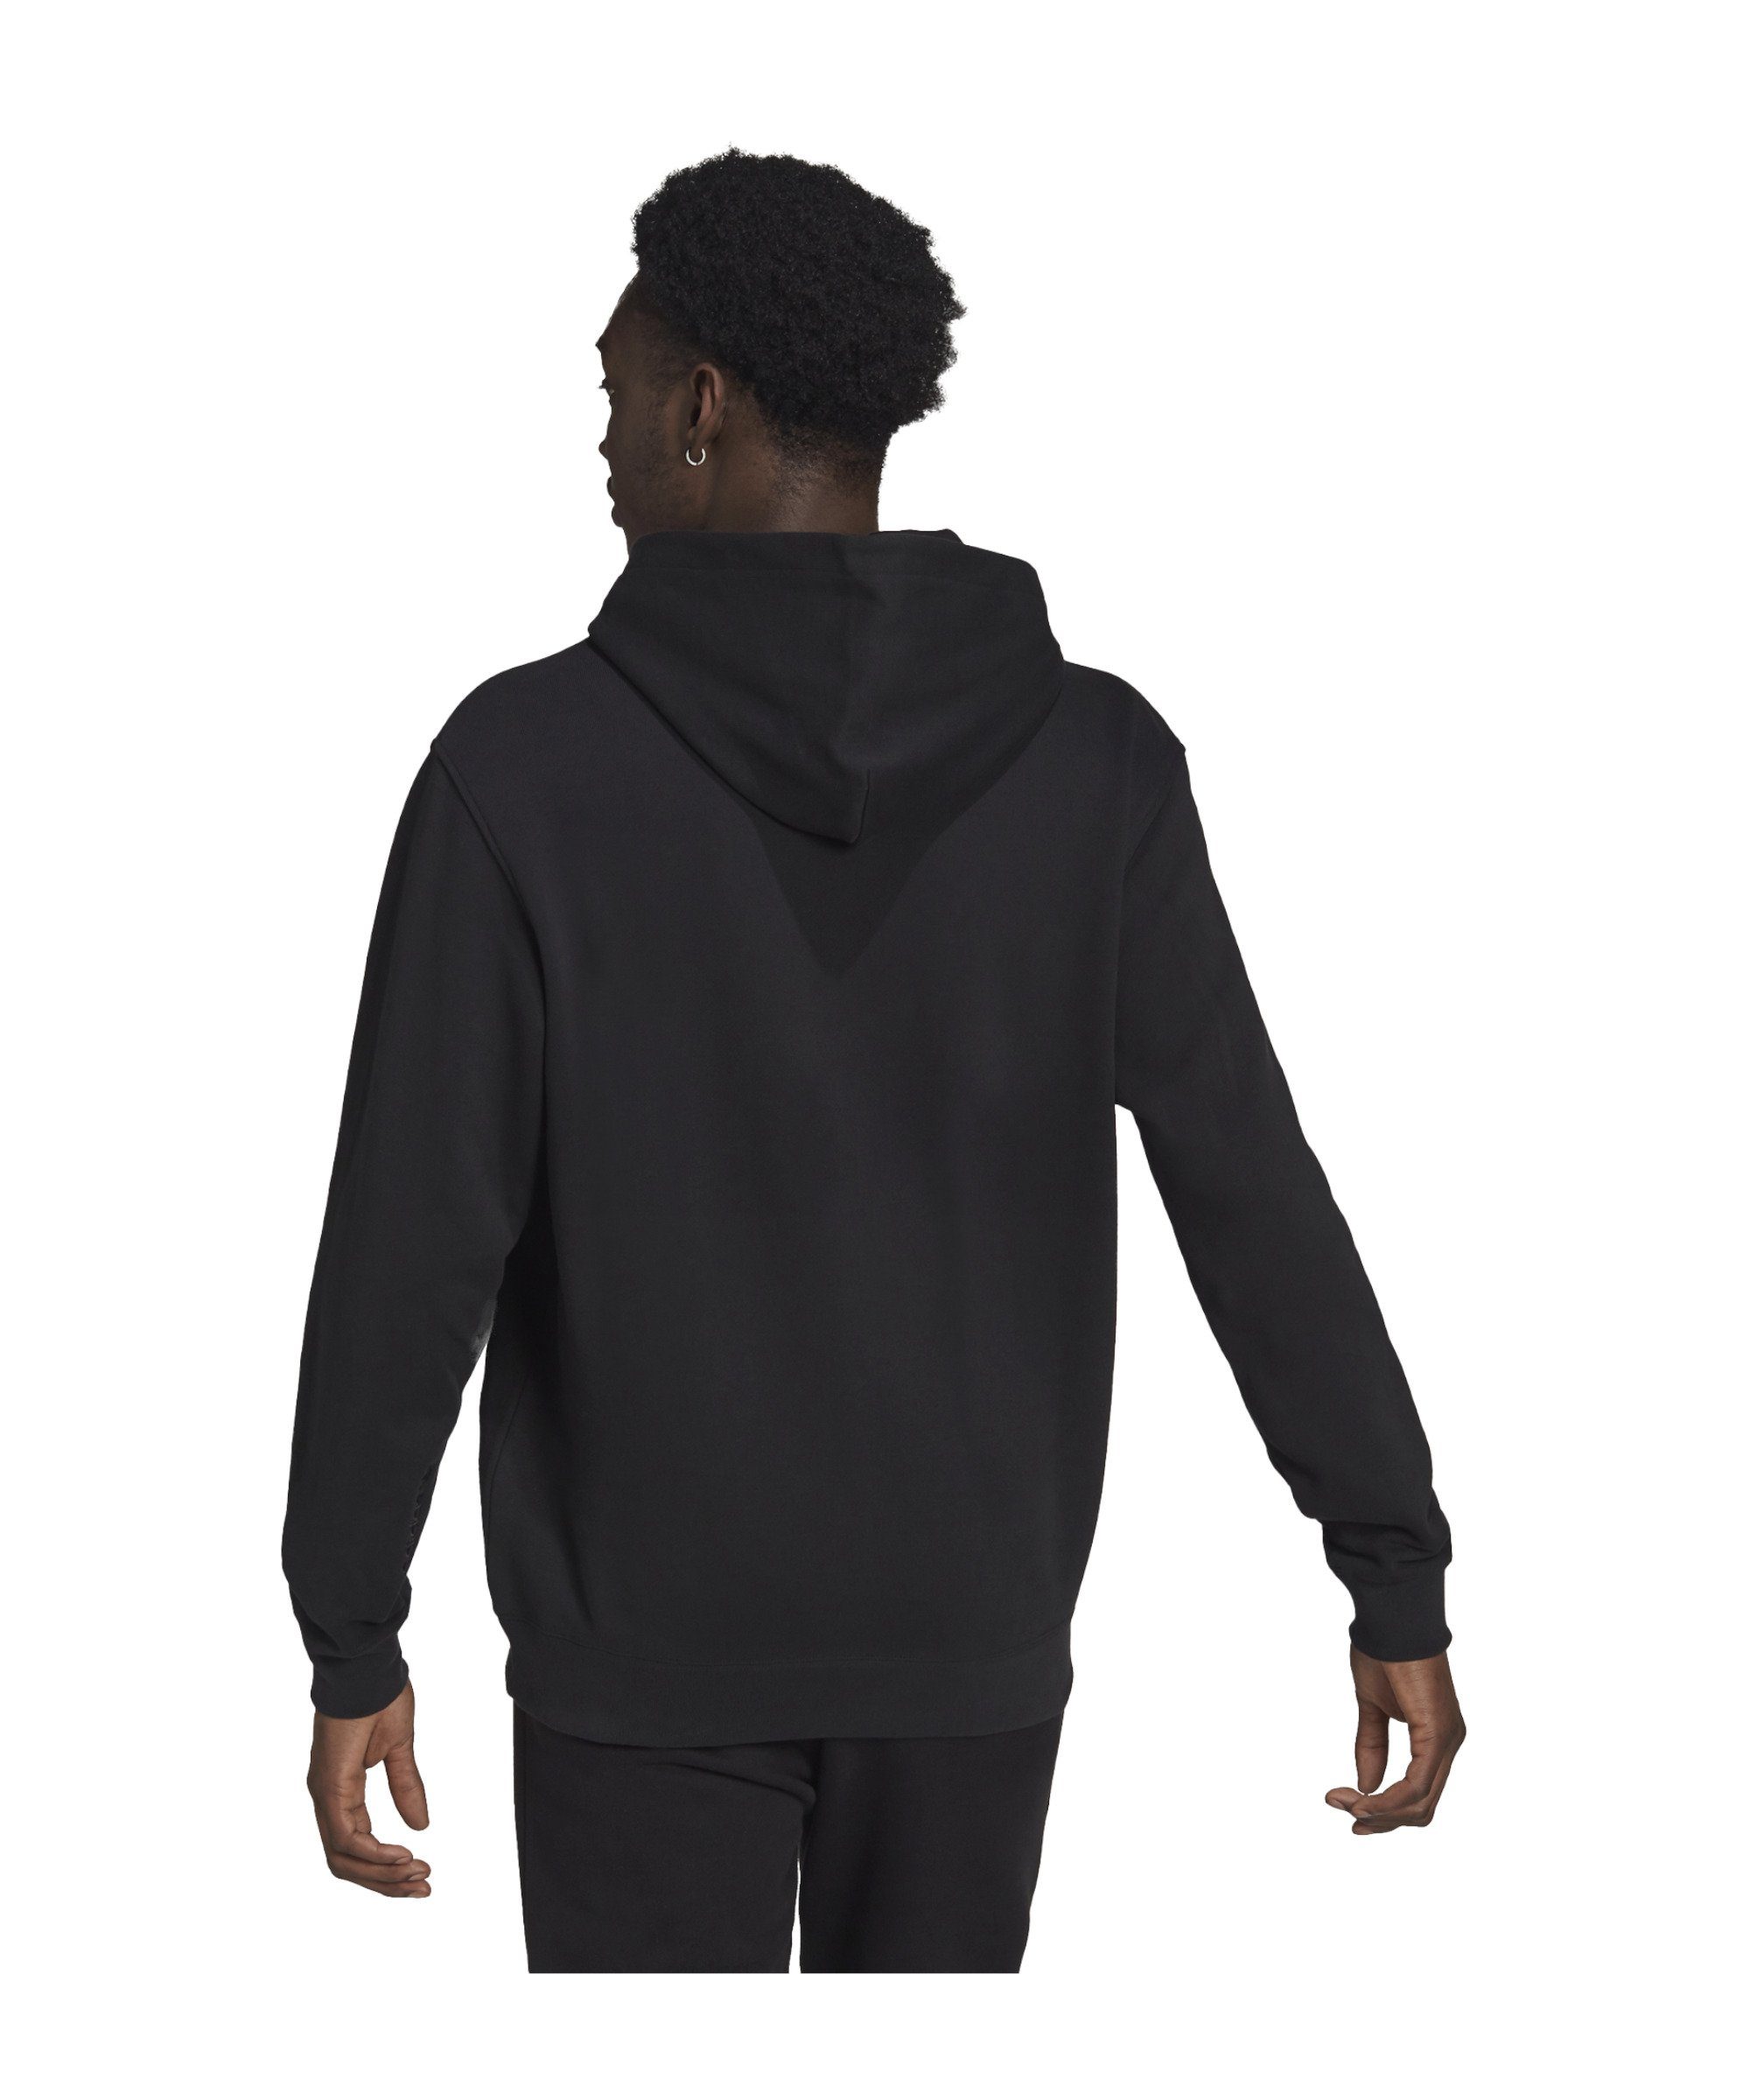 Originals Hoody A33 Trefoil schwarz Sweatshirt adidas